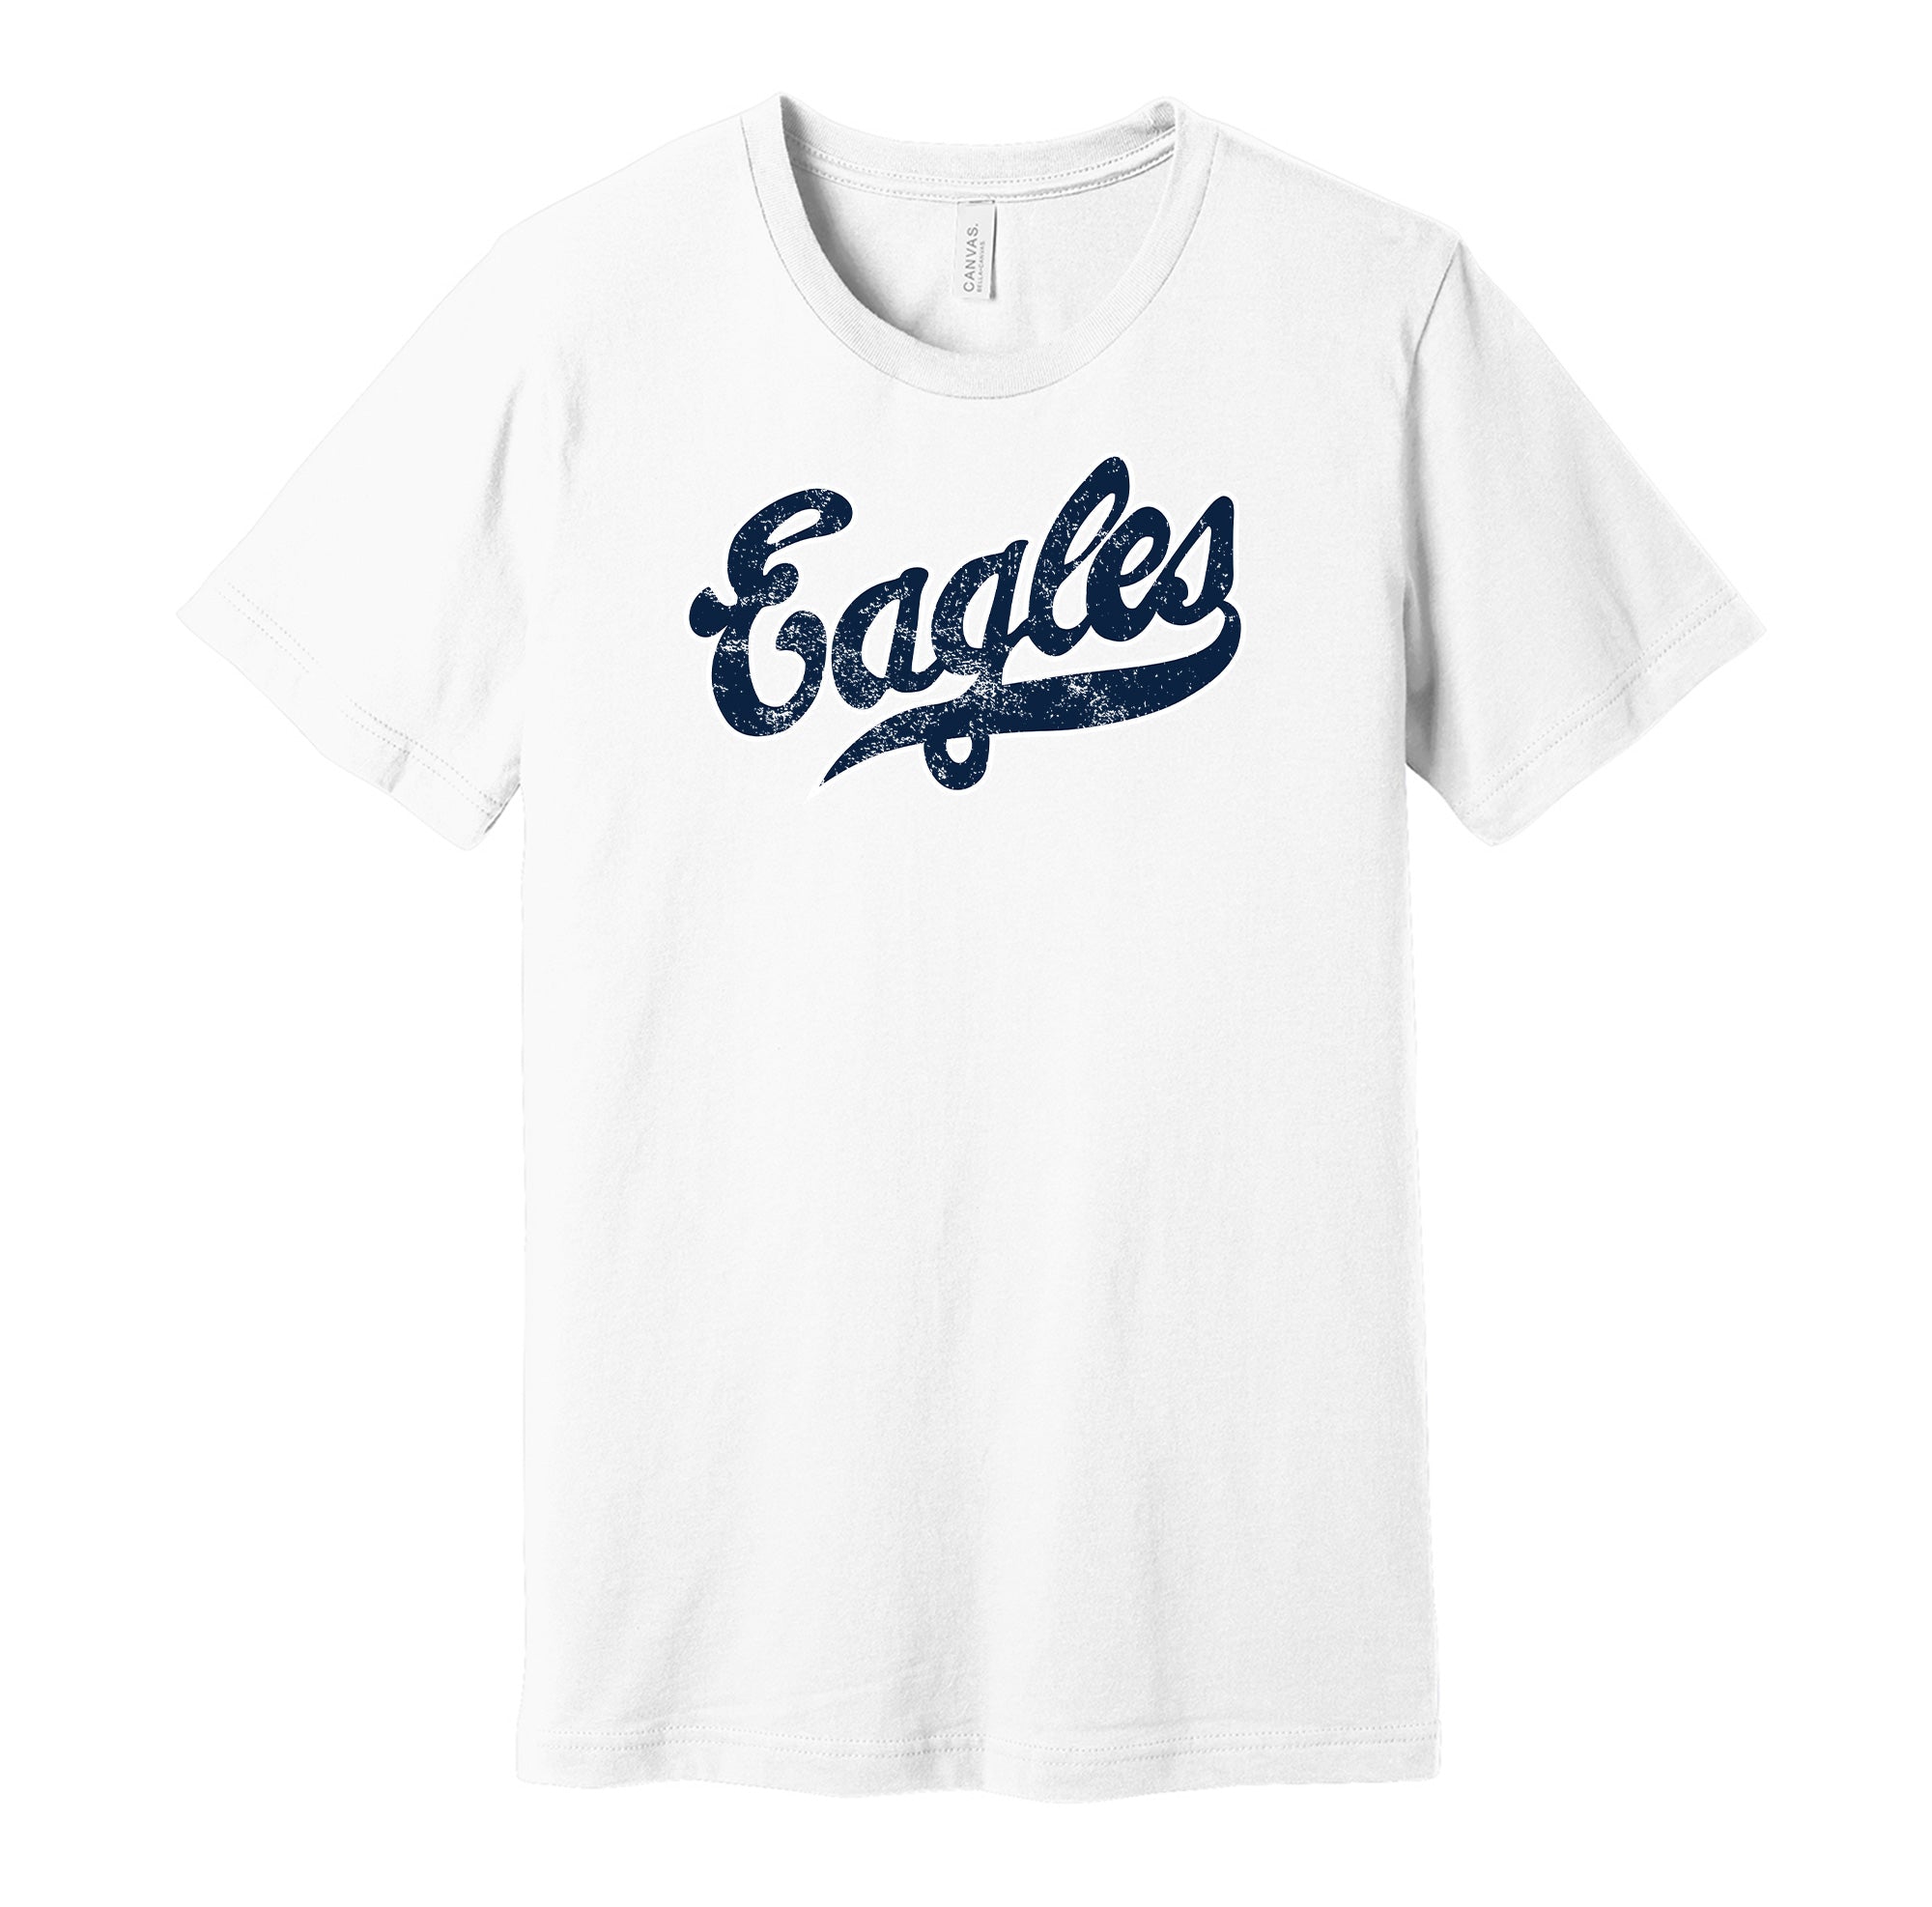 Hyper Than Hype Shirts Houston/Newark Eagles Distressed Logo Shirt - Defunct Negro Baseball Team - Celebrate Black Heritage and History - Hyper Than Hype XL / White Shirt